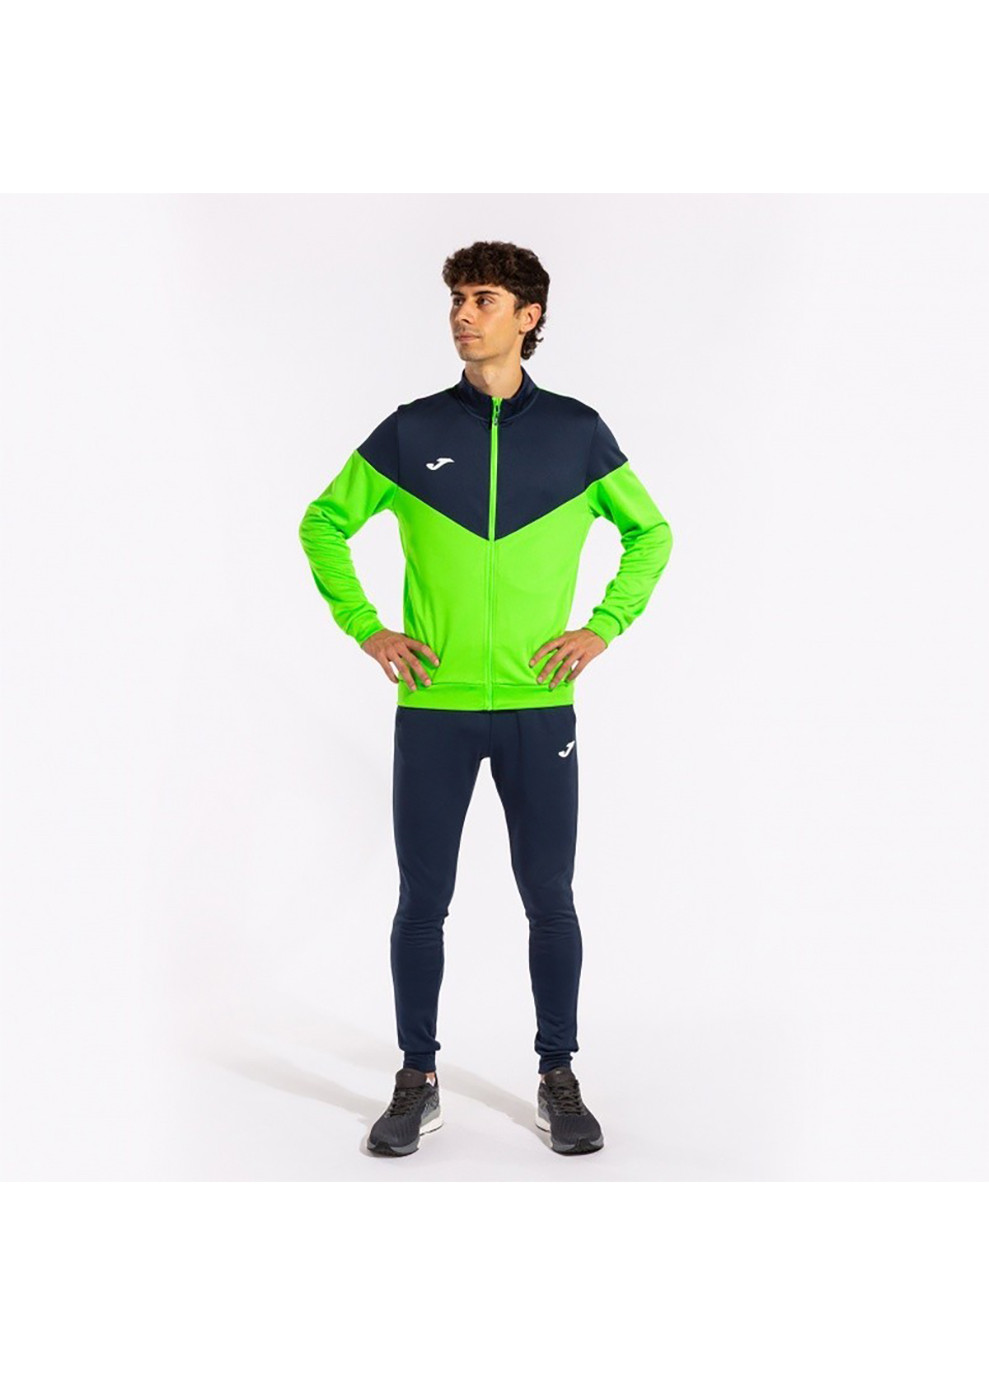 Мужской спортивный костюм OXFORD TRACKSUIT FUOR зеленый, синий Joma (260646938)